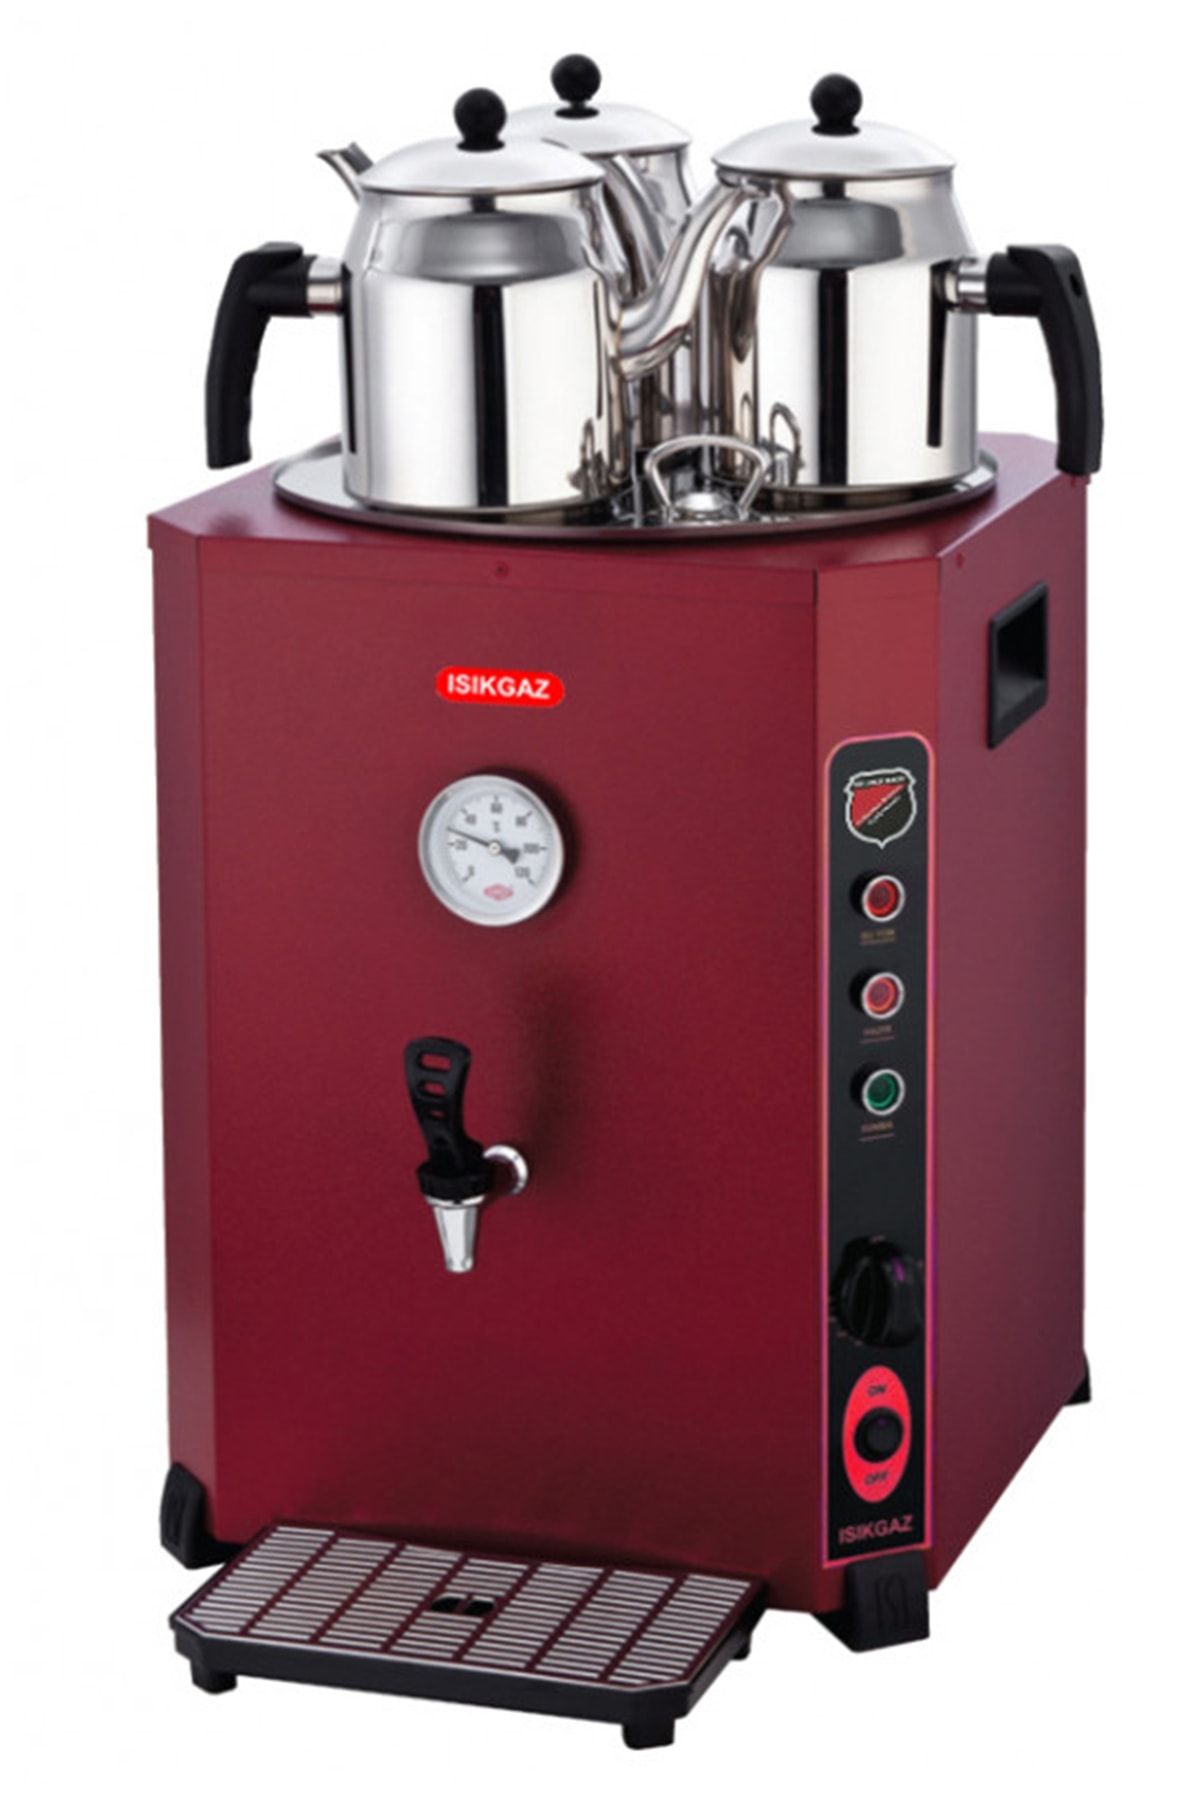 Işıkgaz Jumbo Çay Makinesi 36 Lt. 2500 W. Kırmızı Profesyonel Endüstriyel